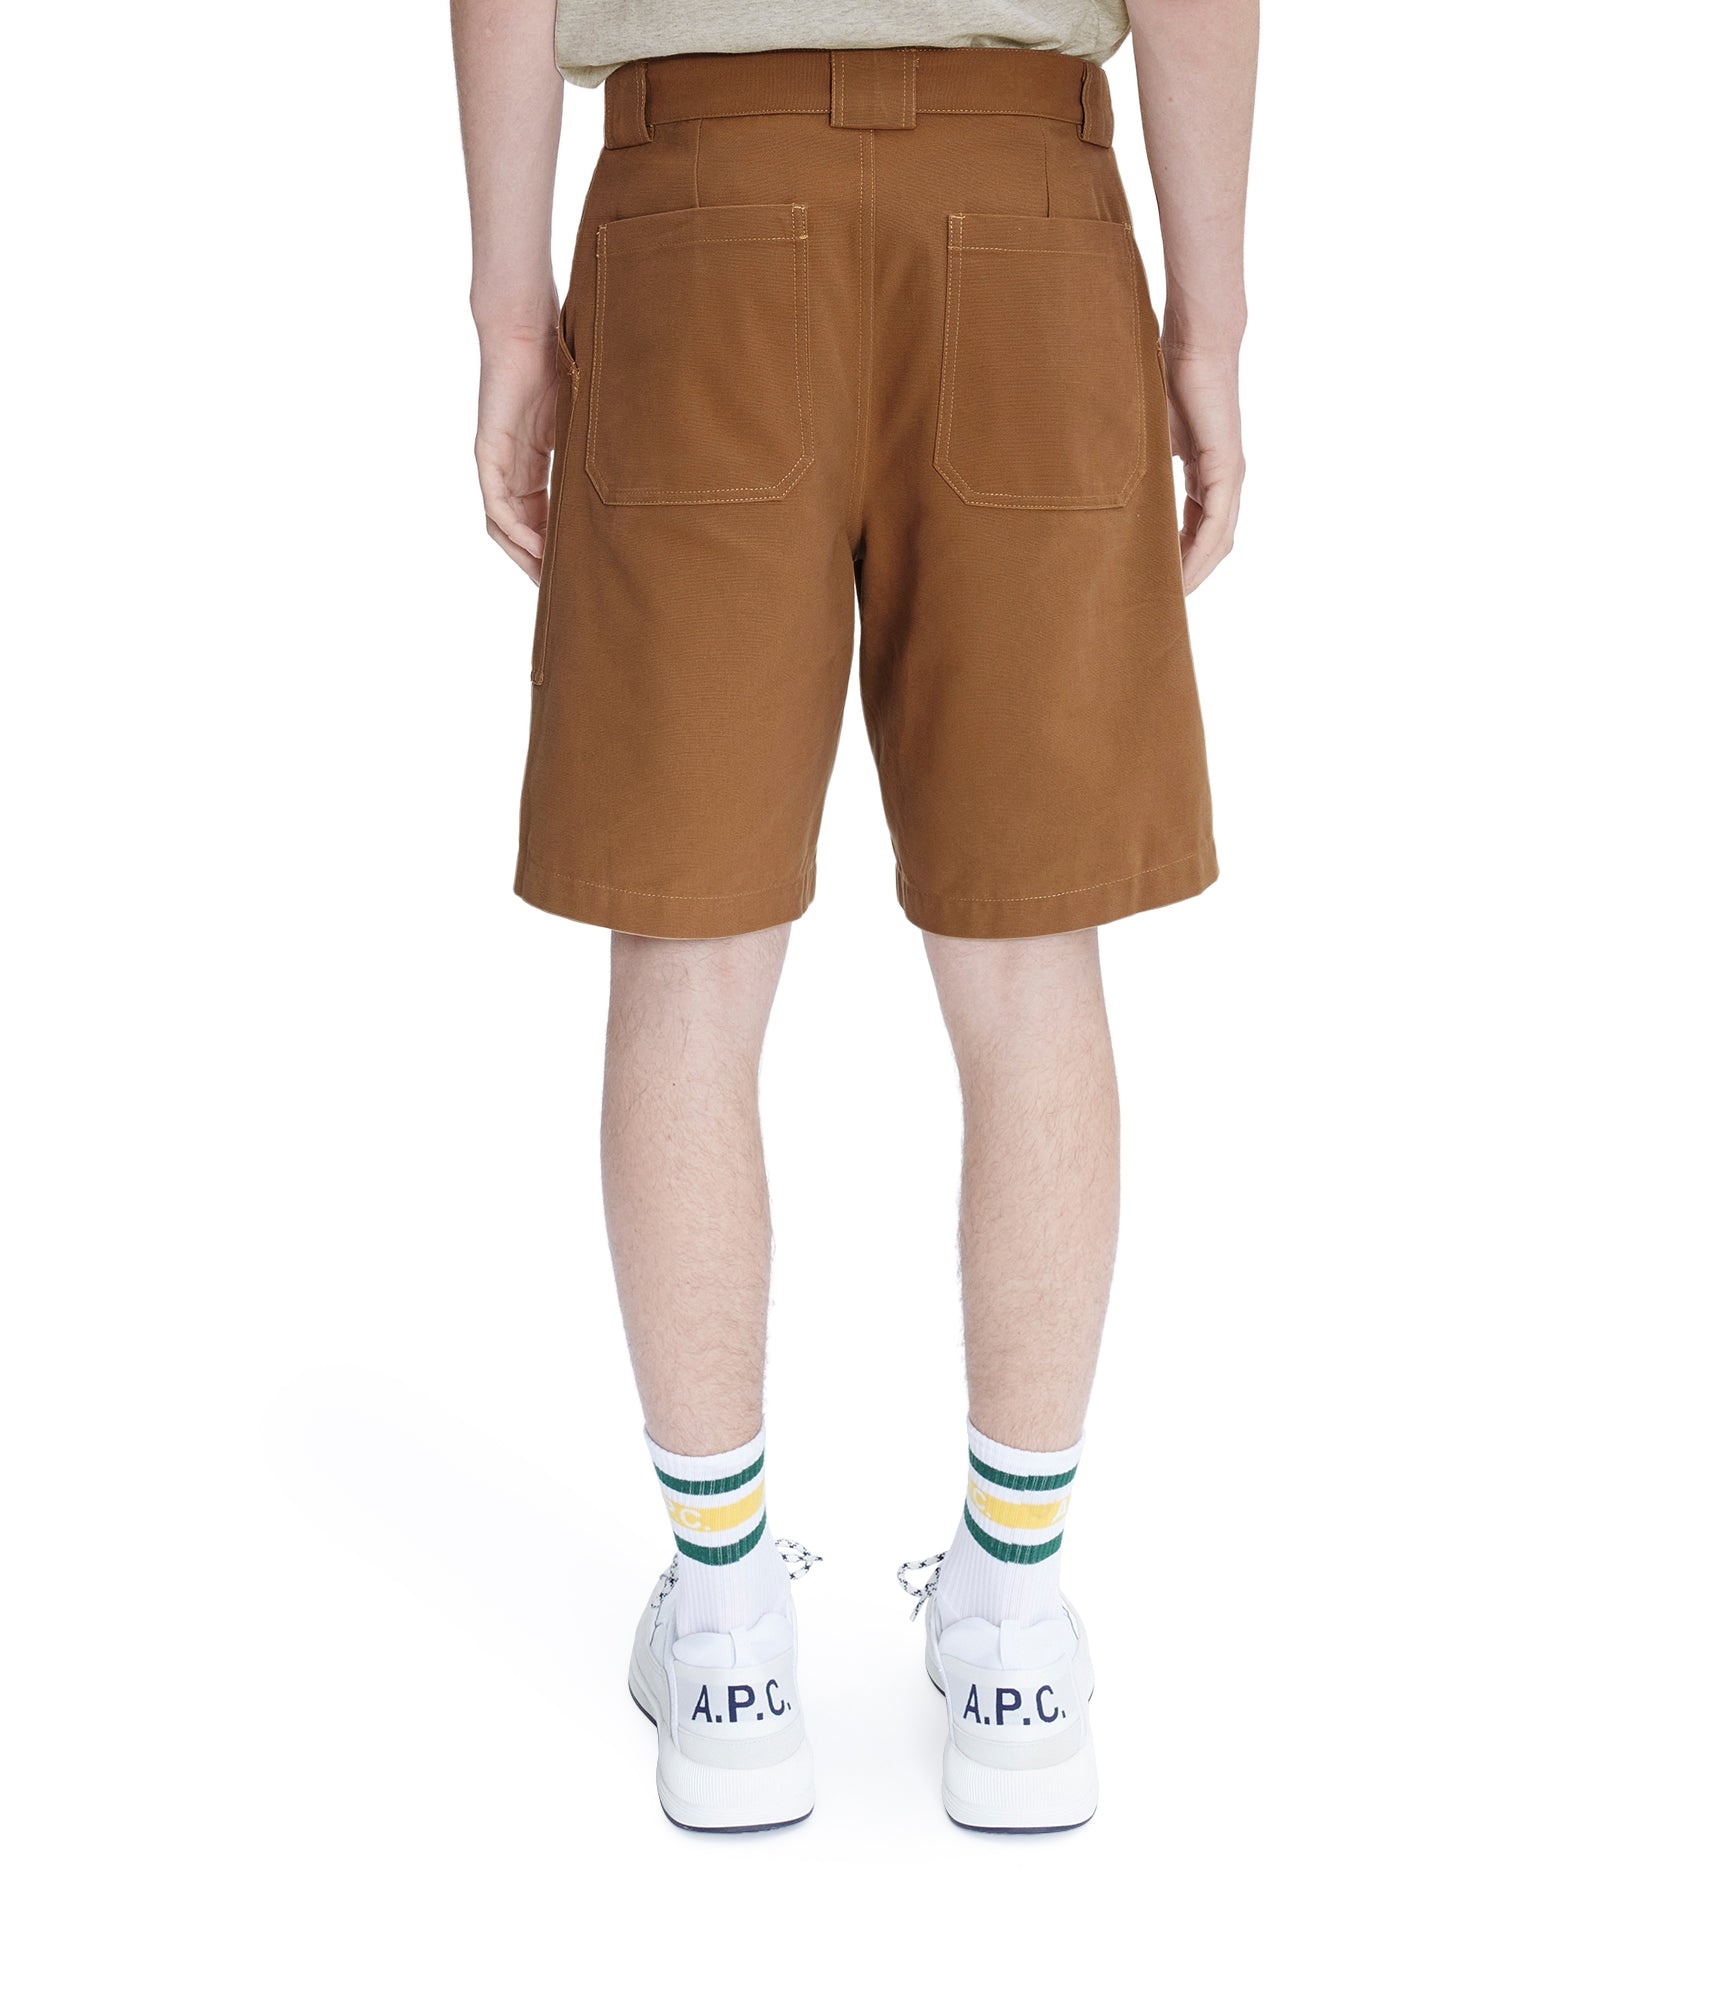 Melbourne shorts - 5